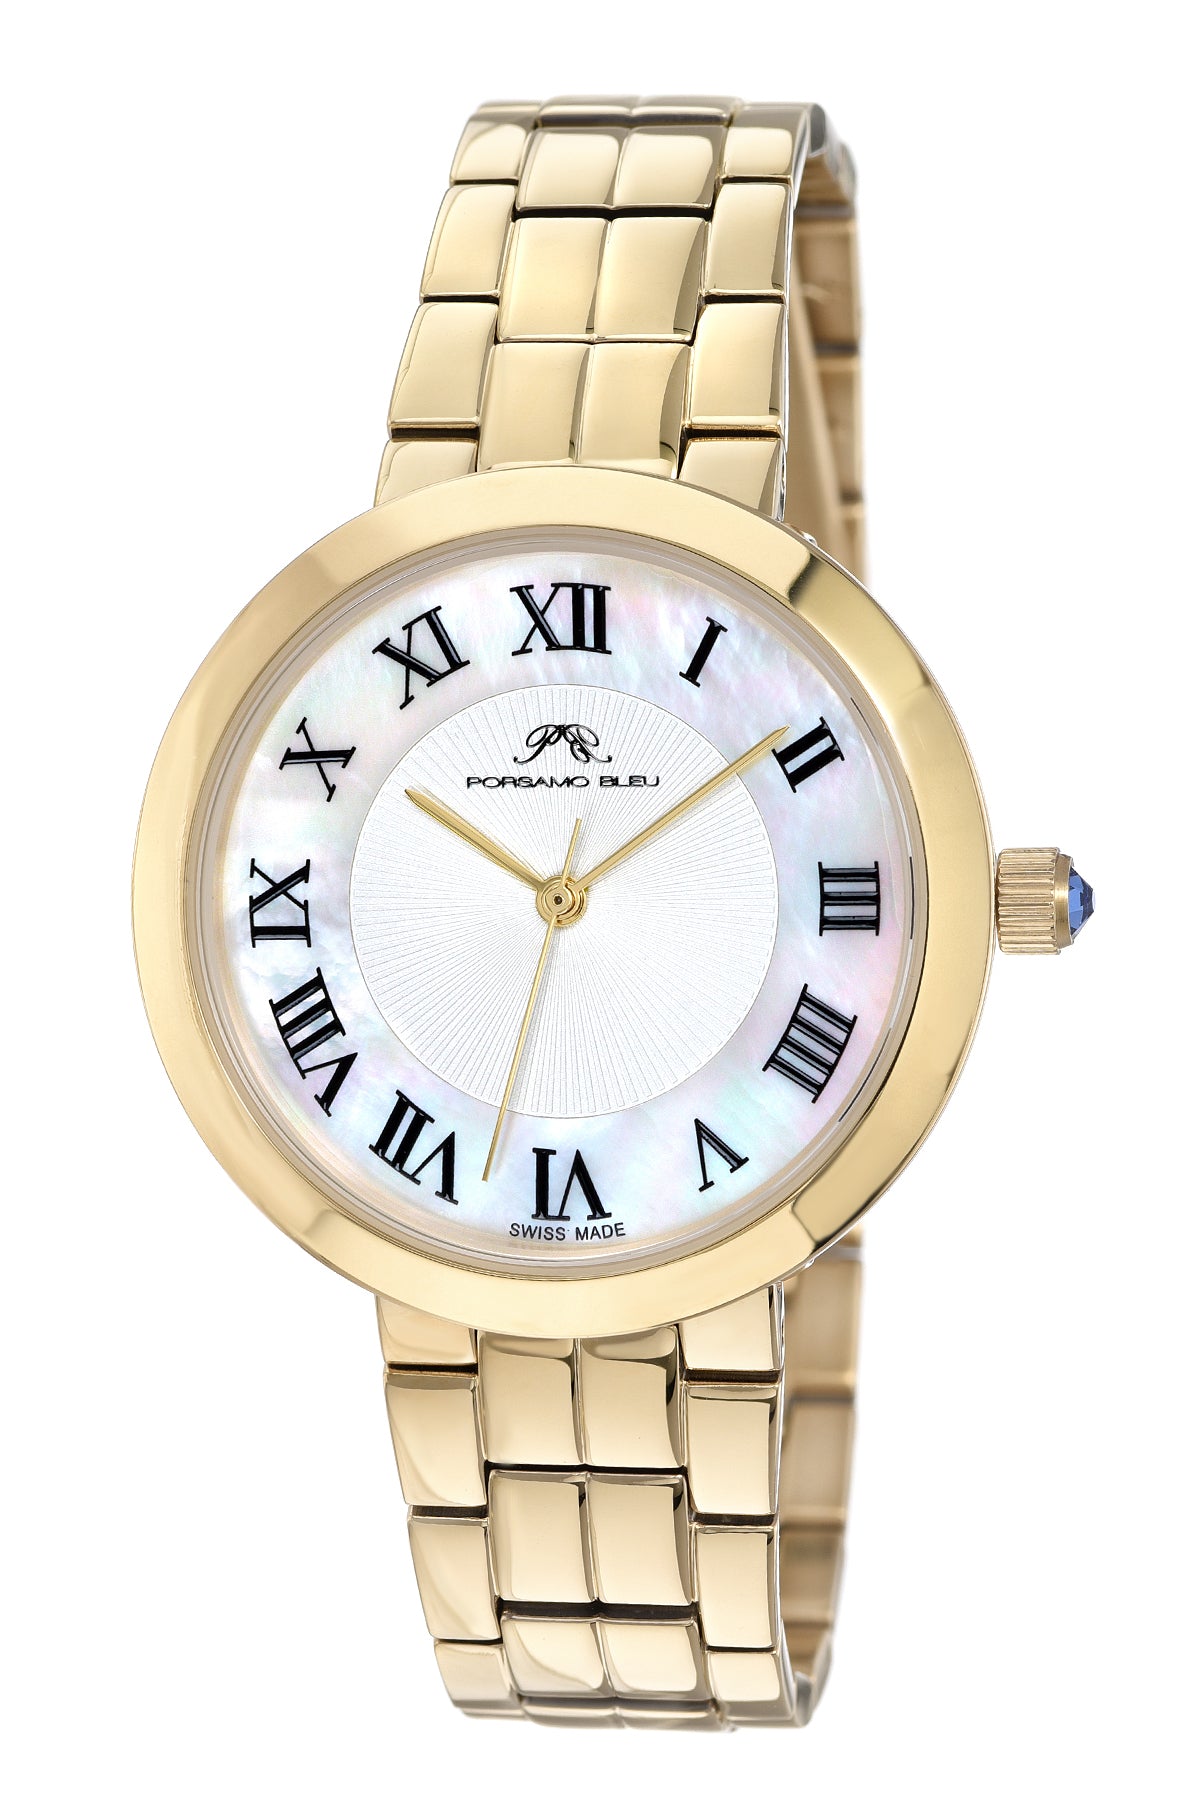 Porsamo Bleu Helena Luxury Women's Stainless Steel Watch, Gold, White 1071BHES